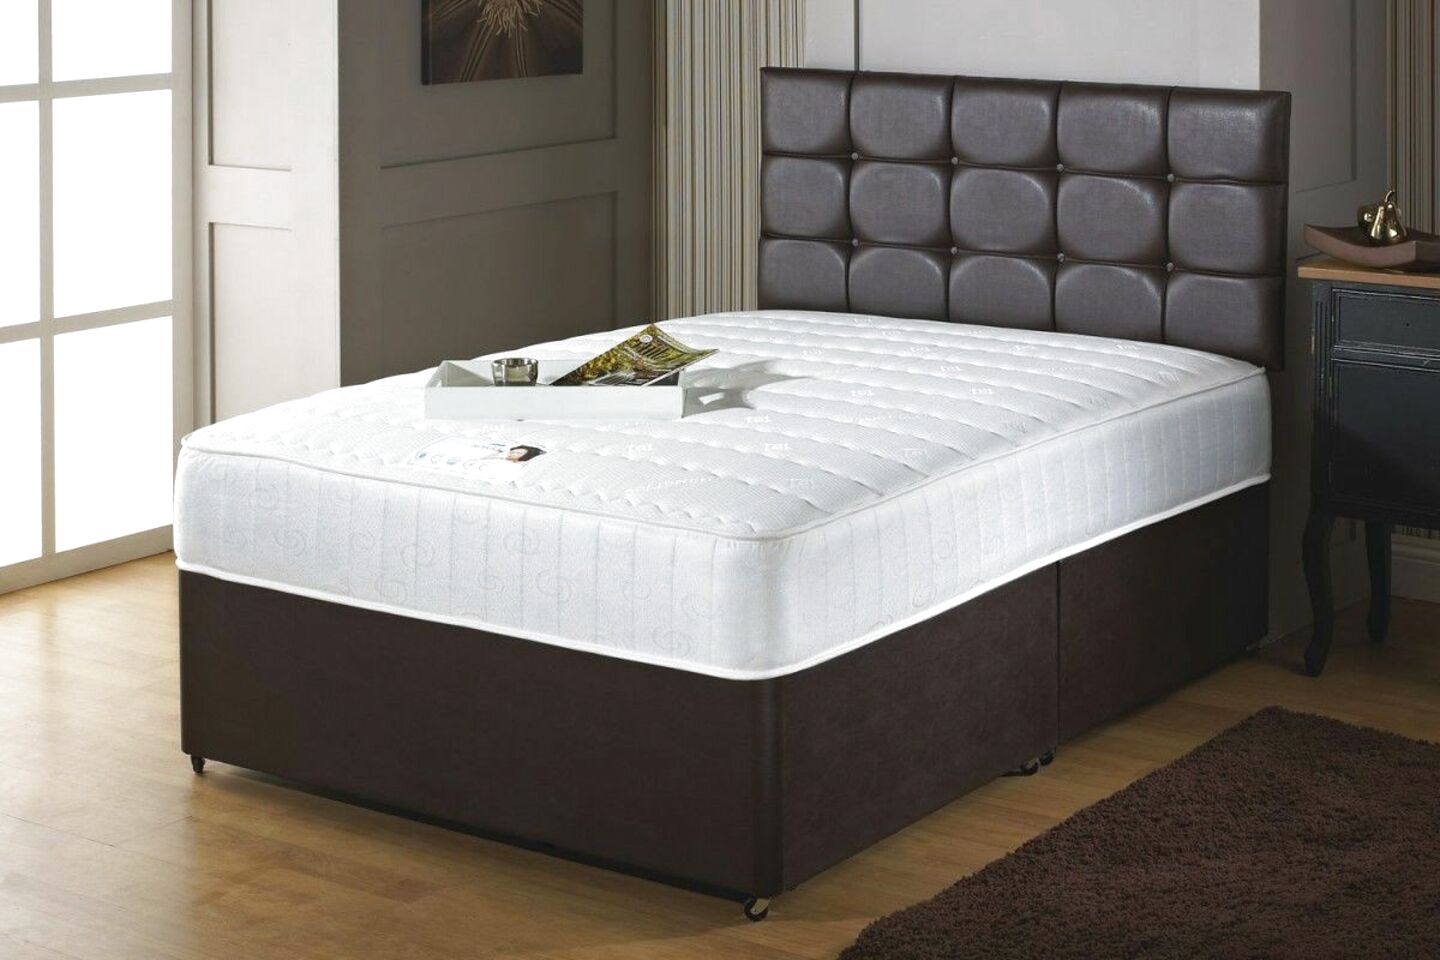 6ft mattress is a full size